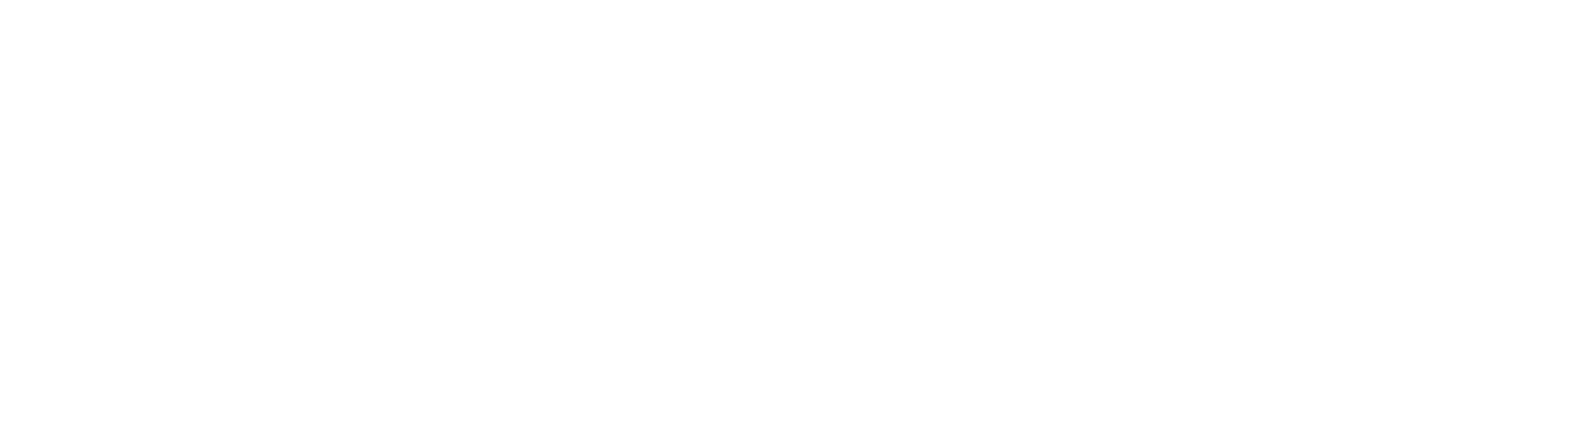 Bendigo and Adelaide Bank Logo groß für dunkle Hintergründe (transparentes PNG)